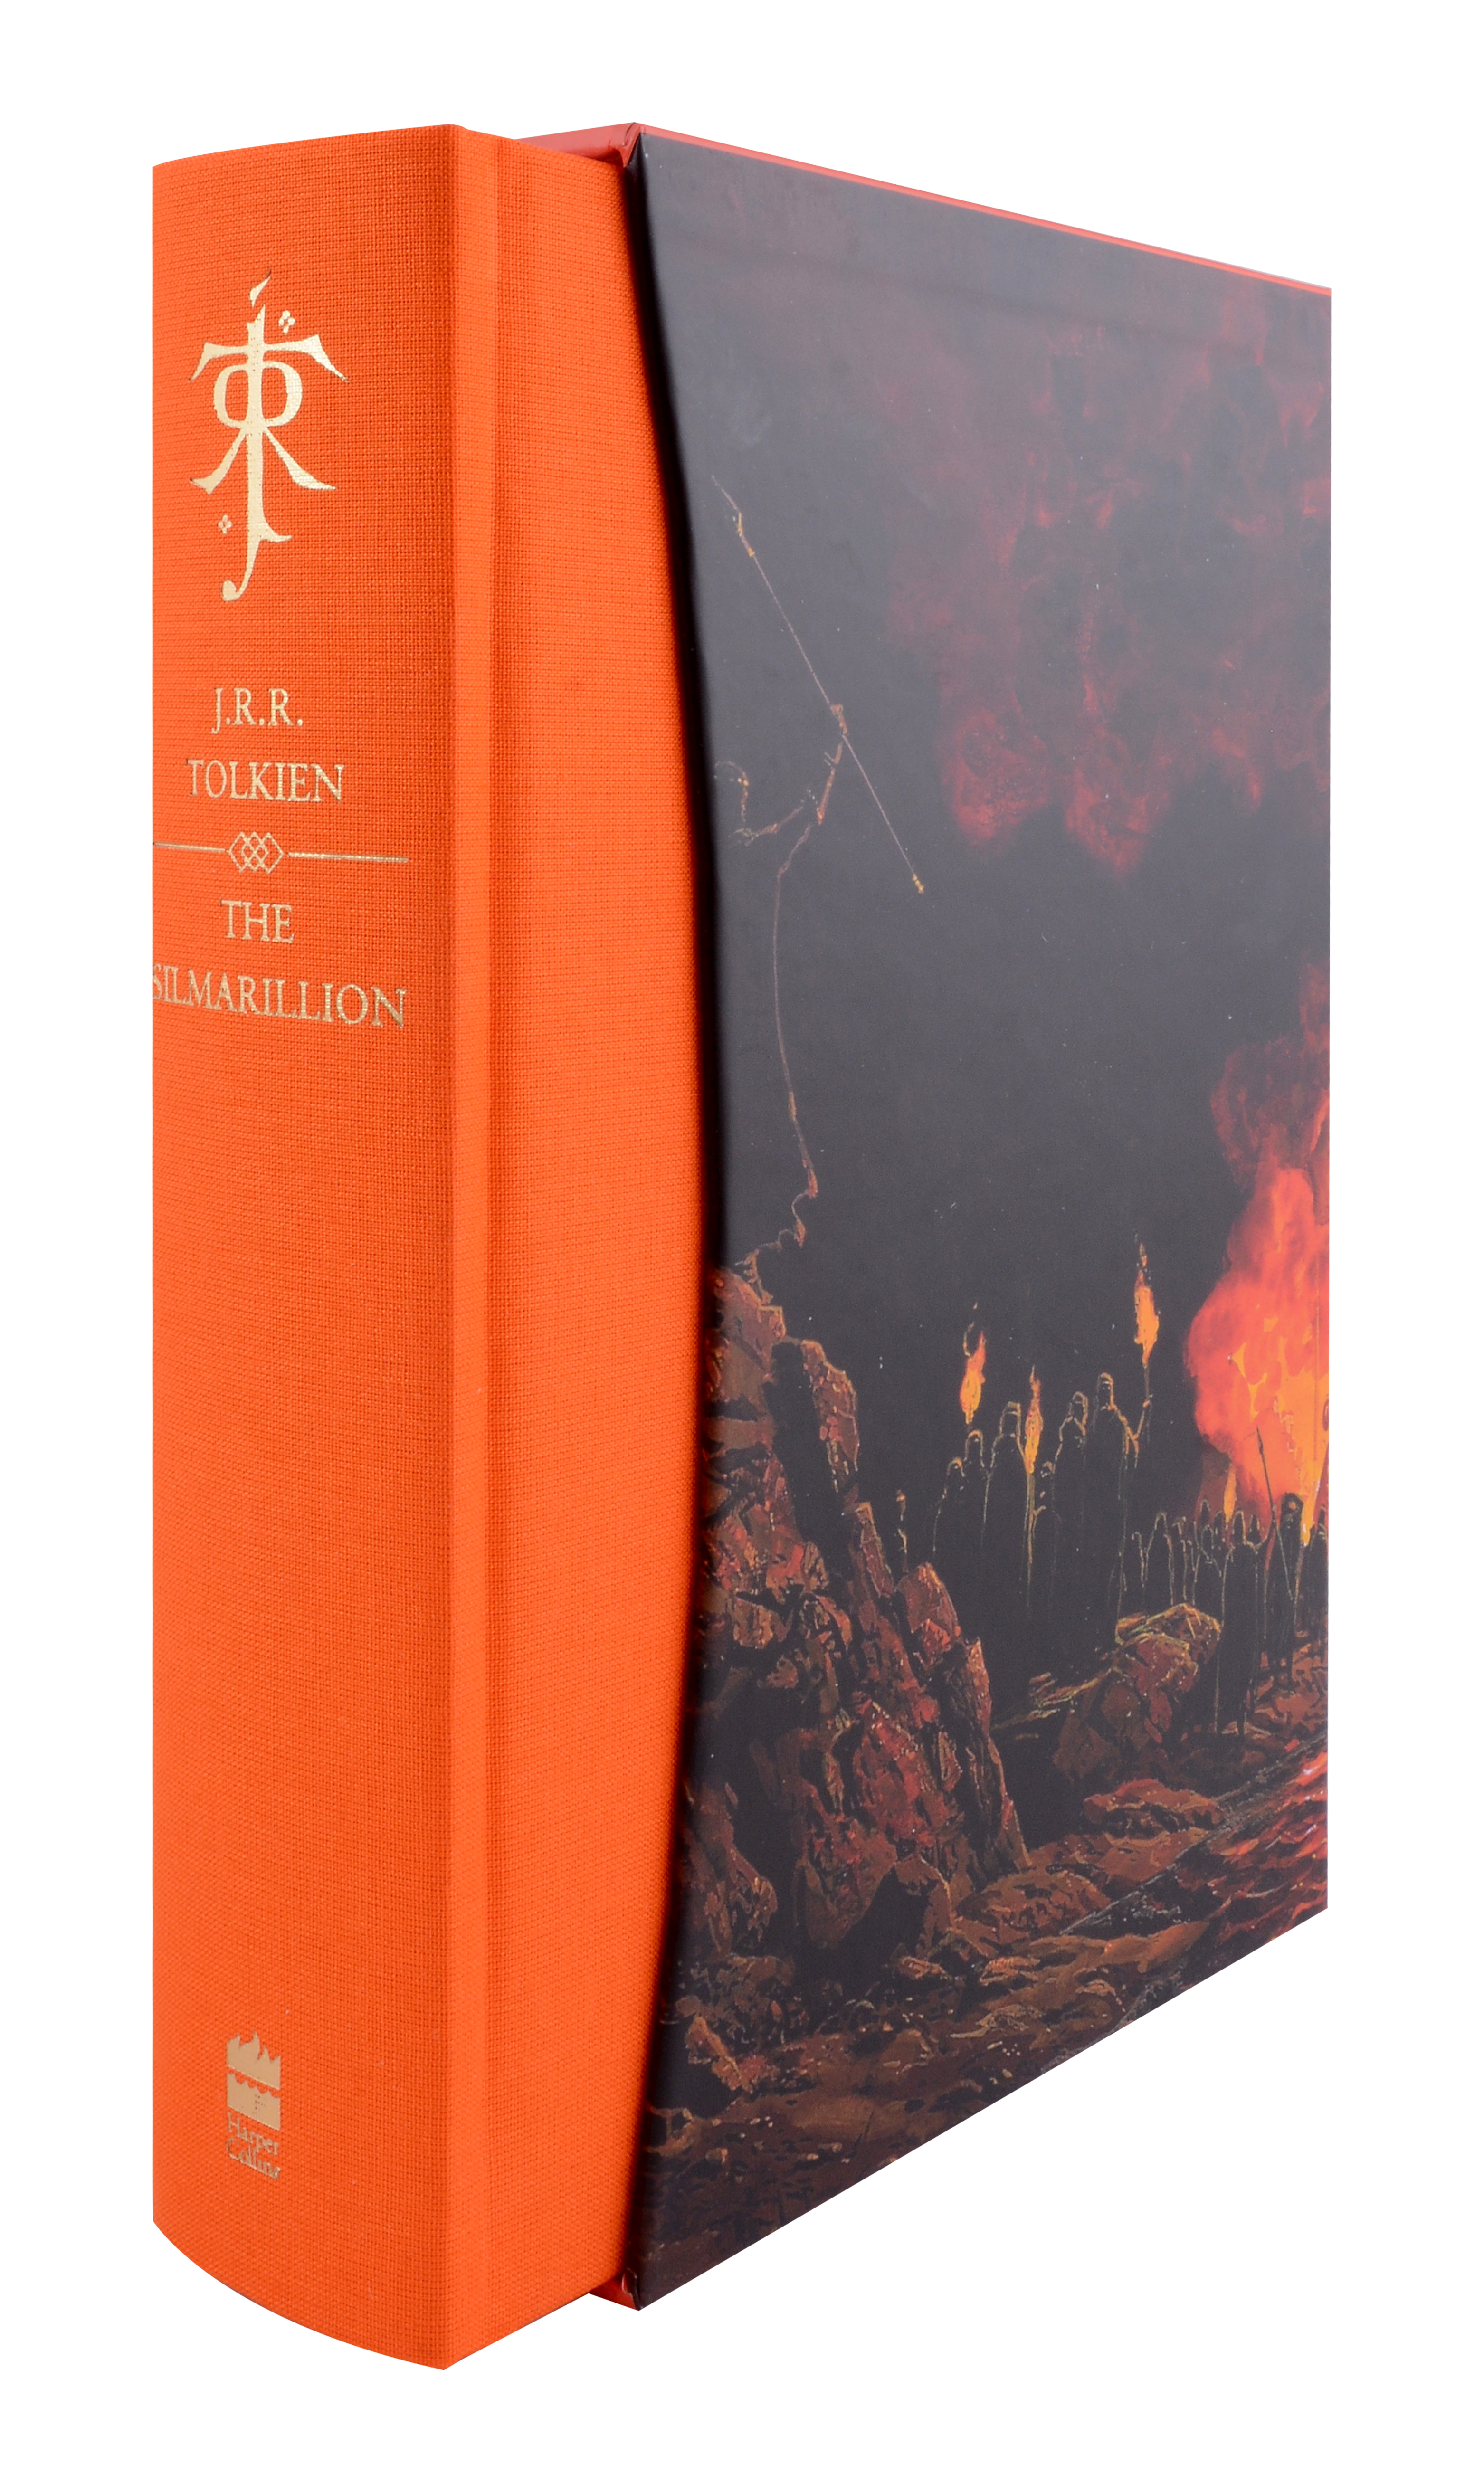 Толкин Джон Рональд Руэл Silmarillion illustrated ed box custom printed presentation folders offset printing folder presentation folder printing